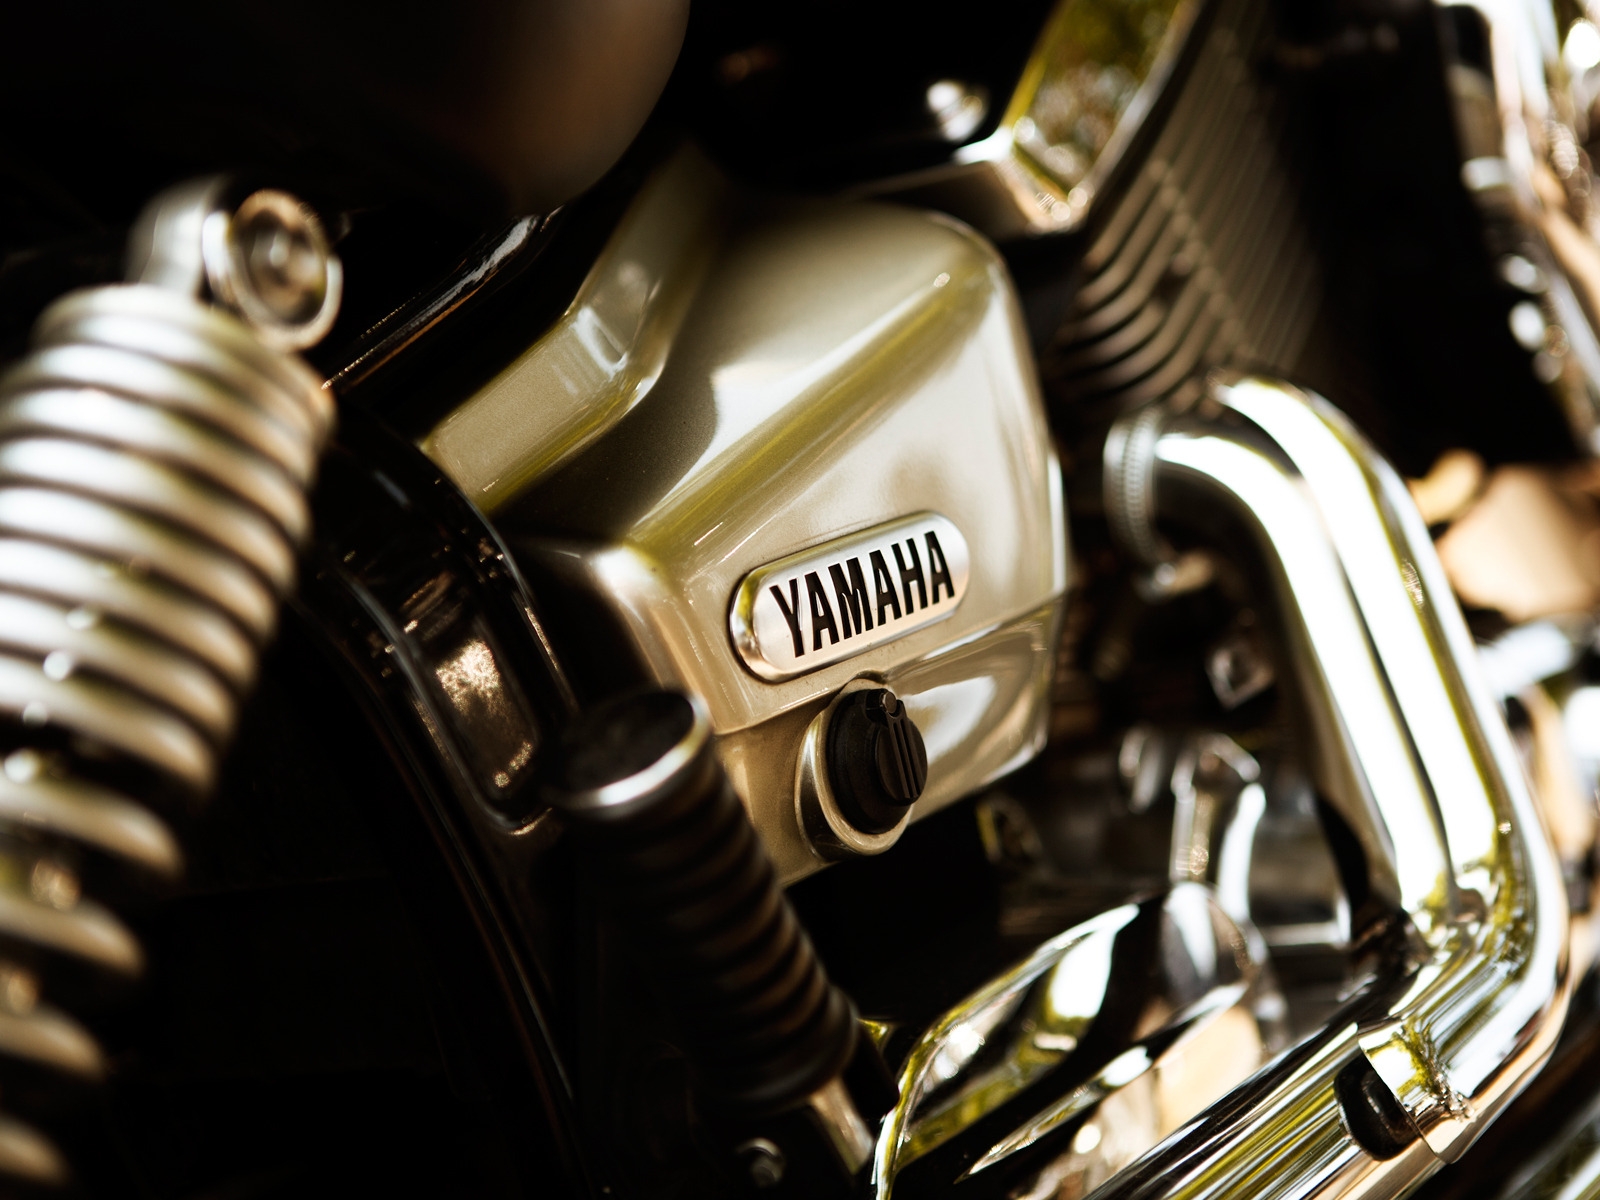 Yamaha bike Close-Up for 1600 x 1200 resolution